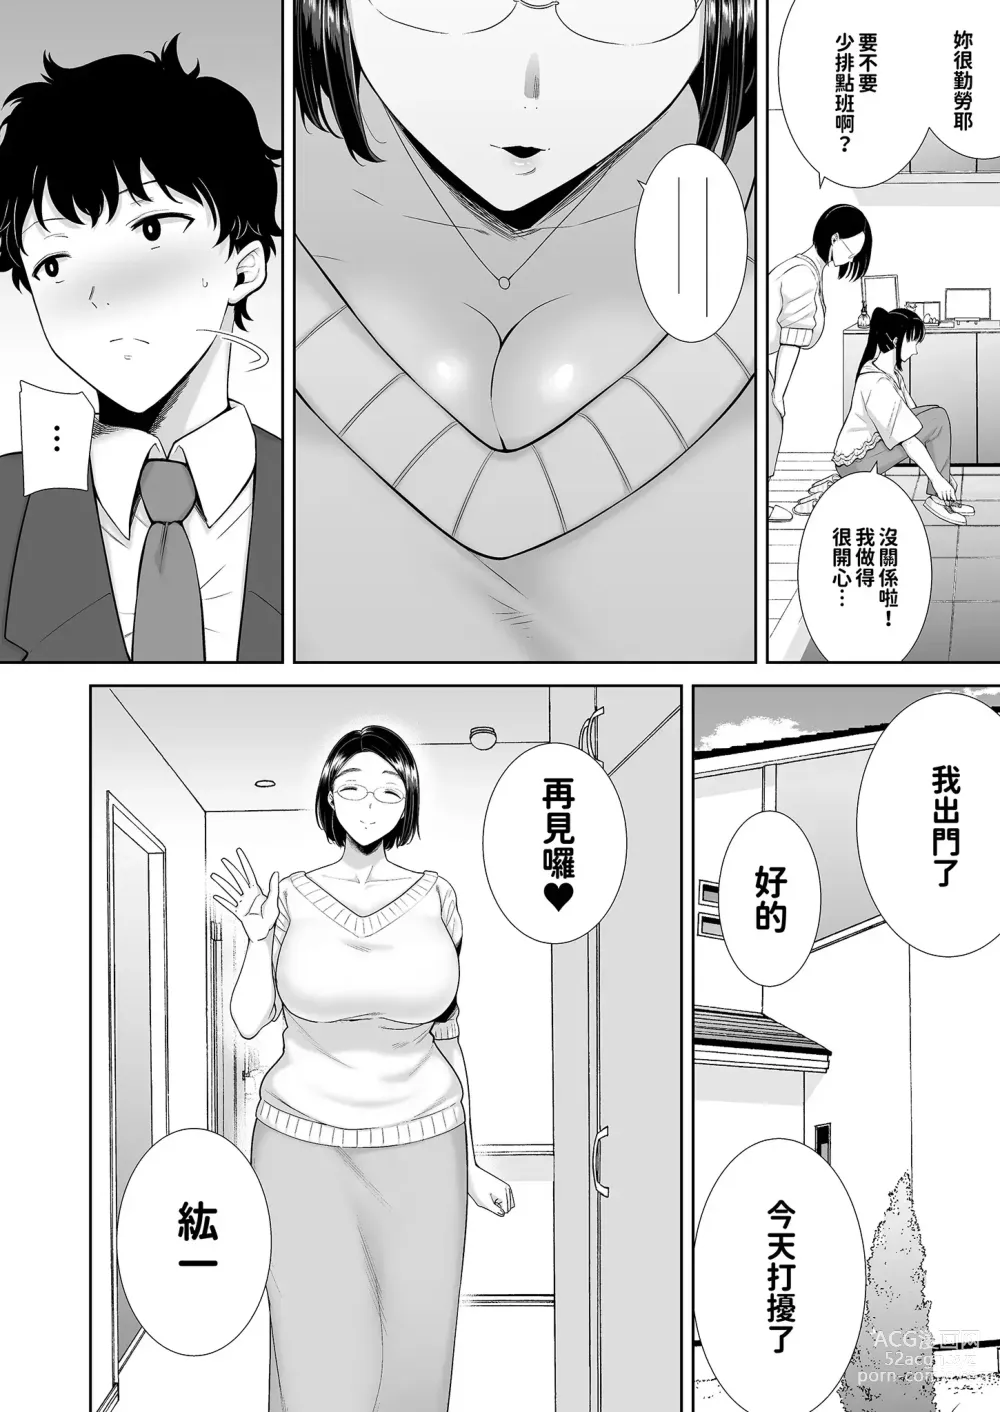 Page 5 of doujinshi sdgsd